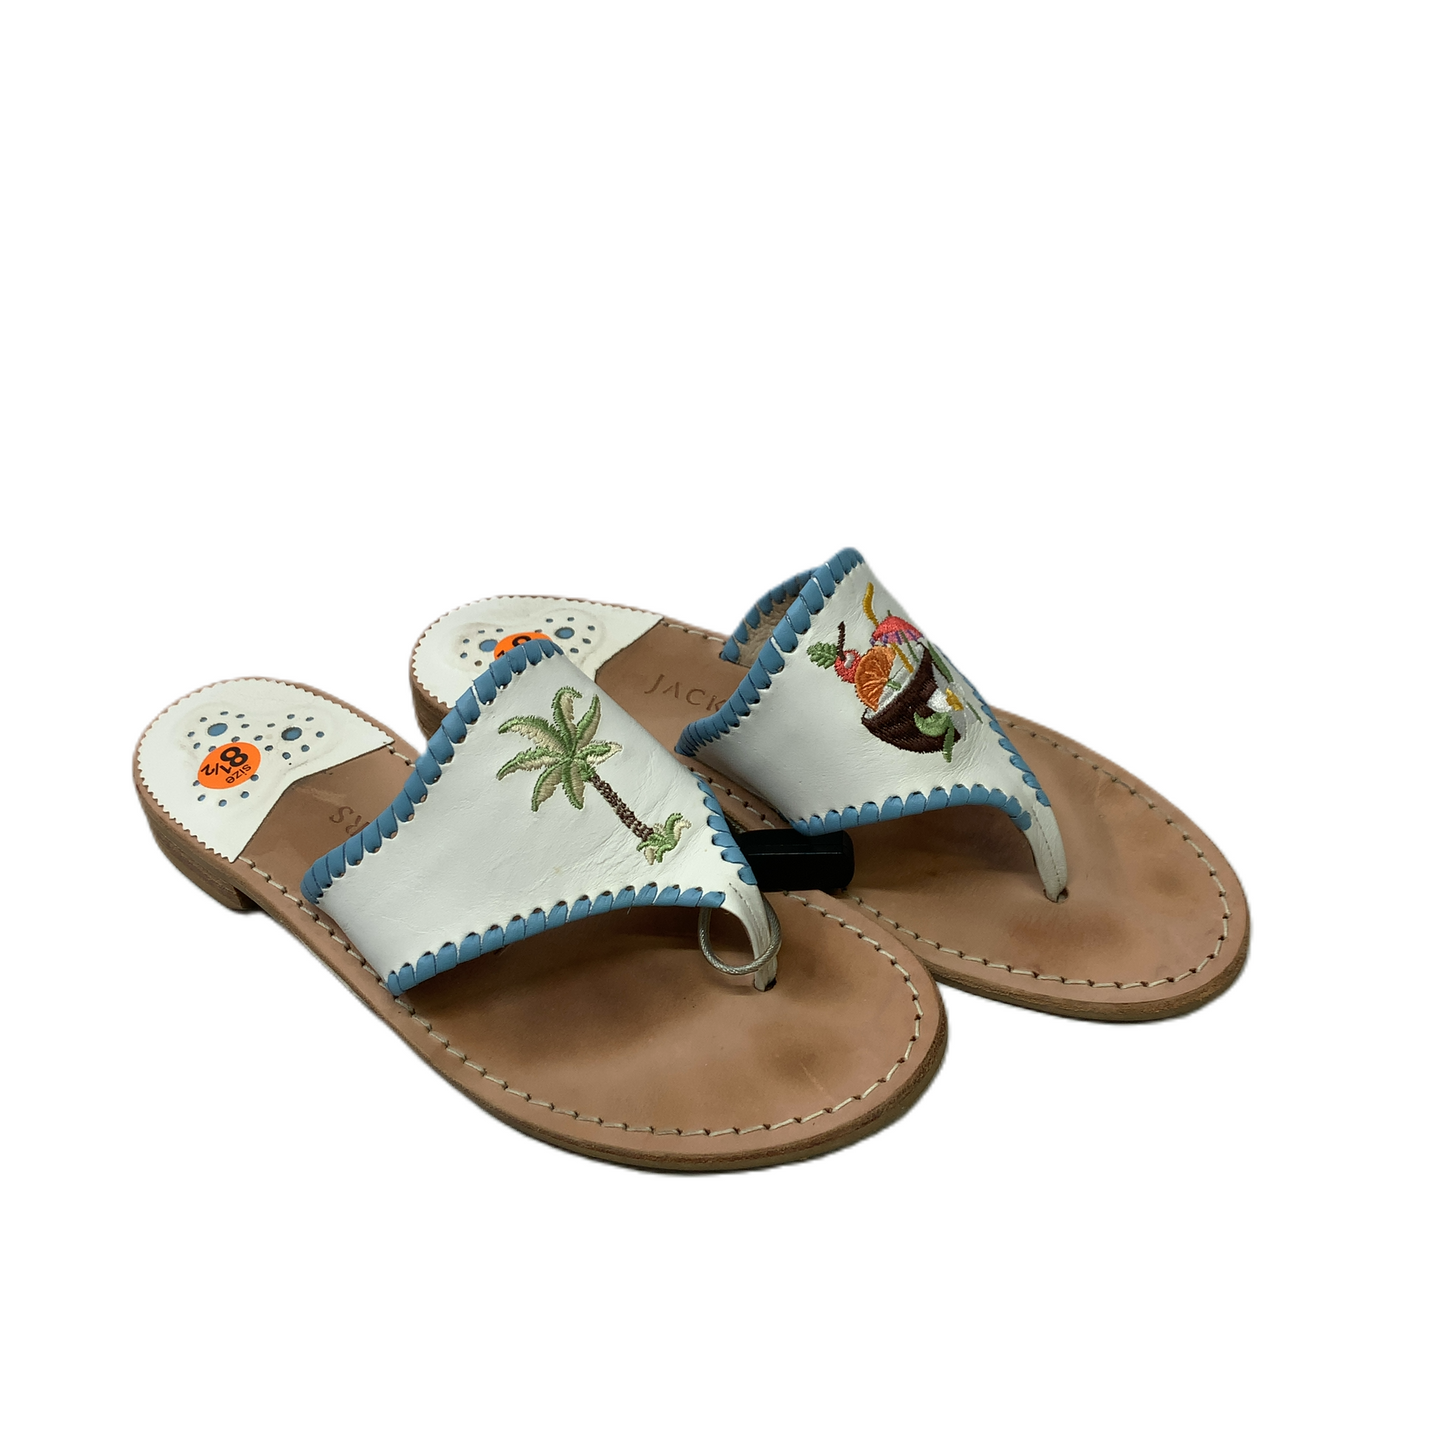 Blue & White  Sandals Designer By Jack Rogers  Size: 8.5